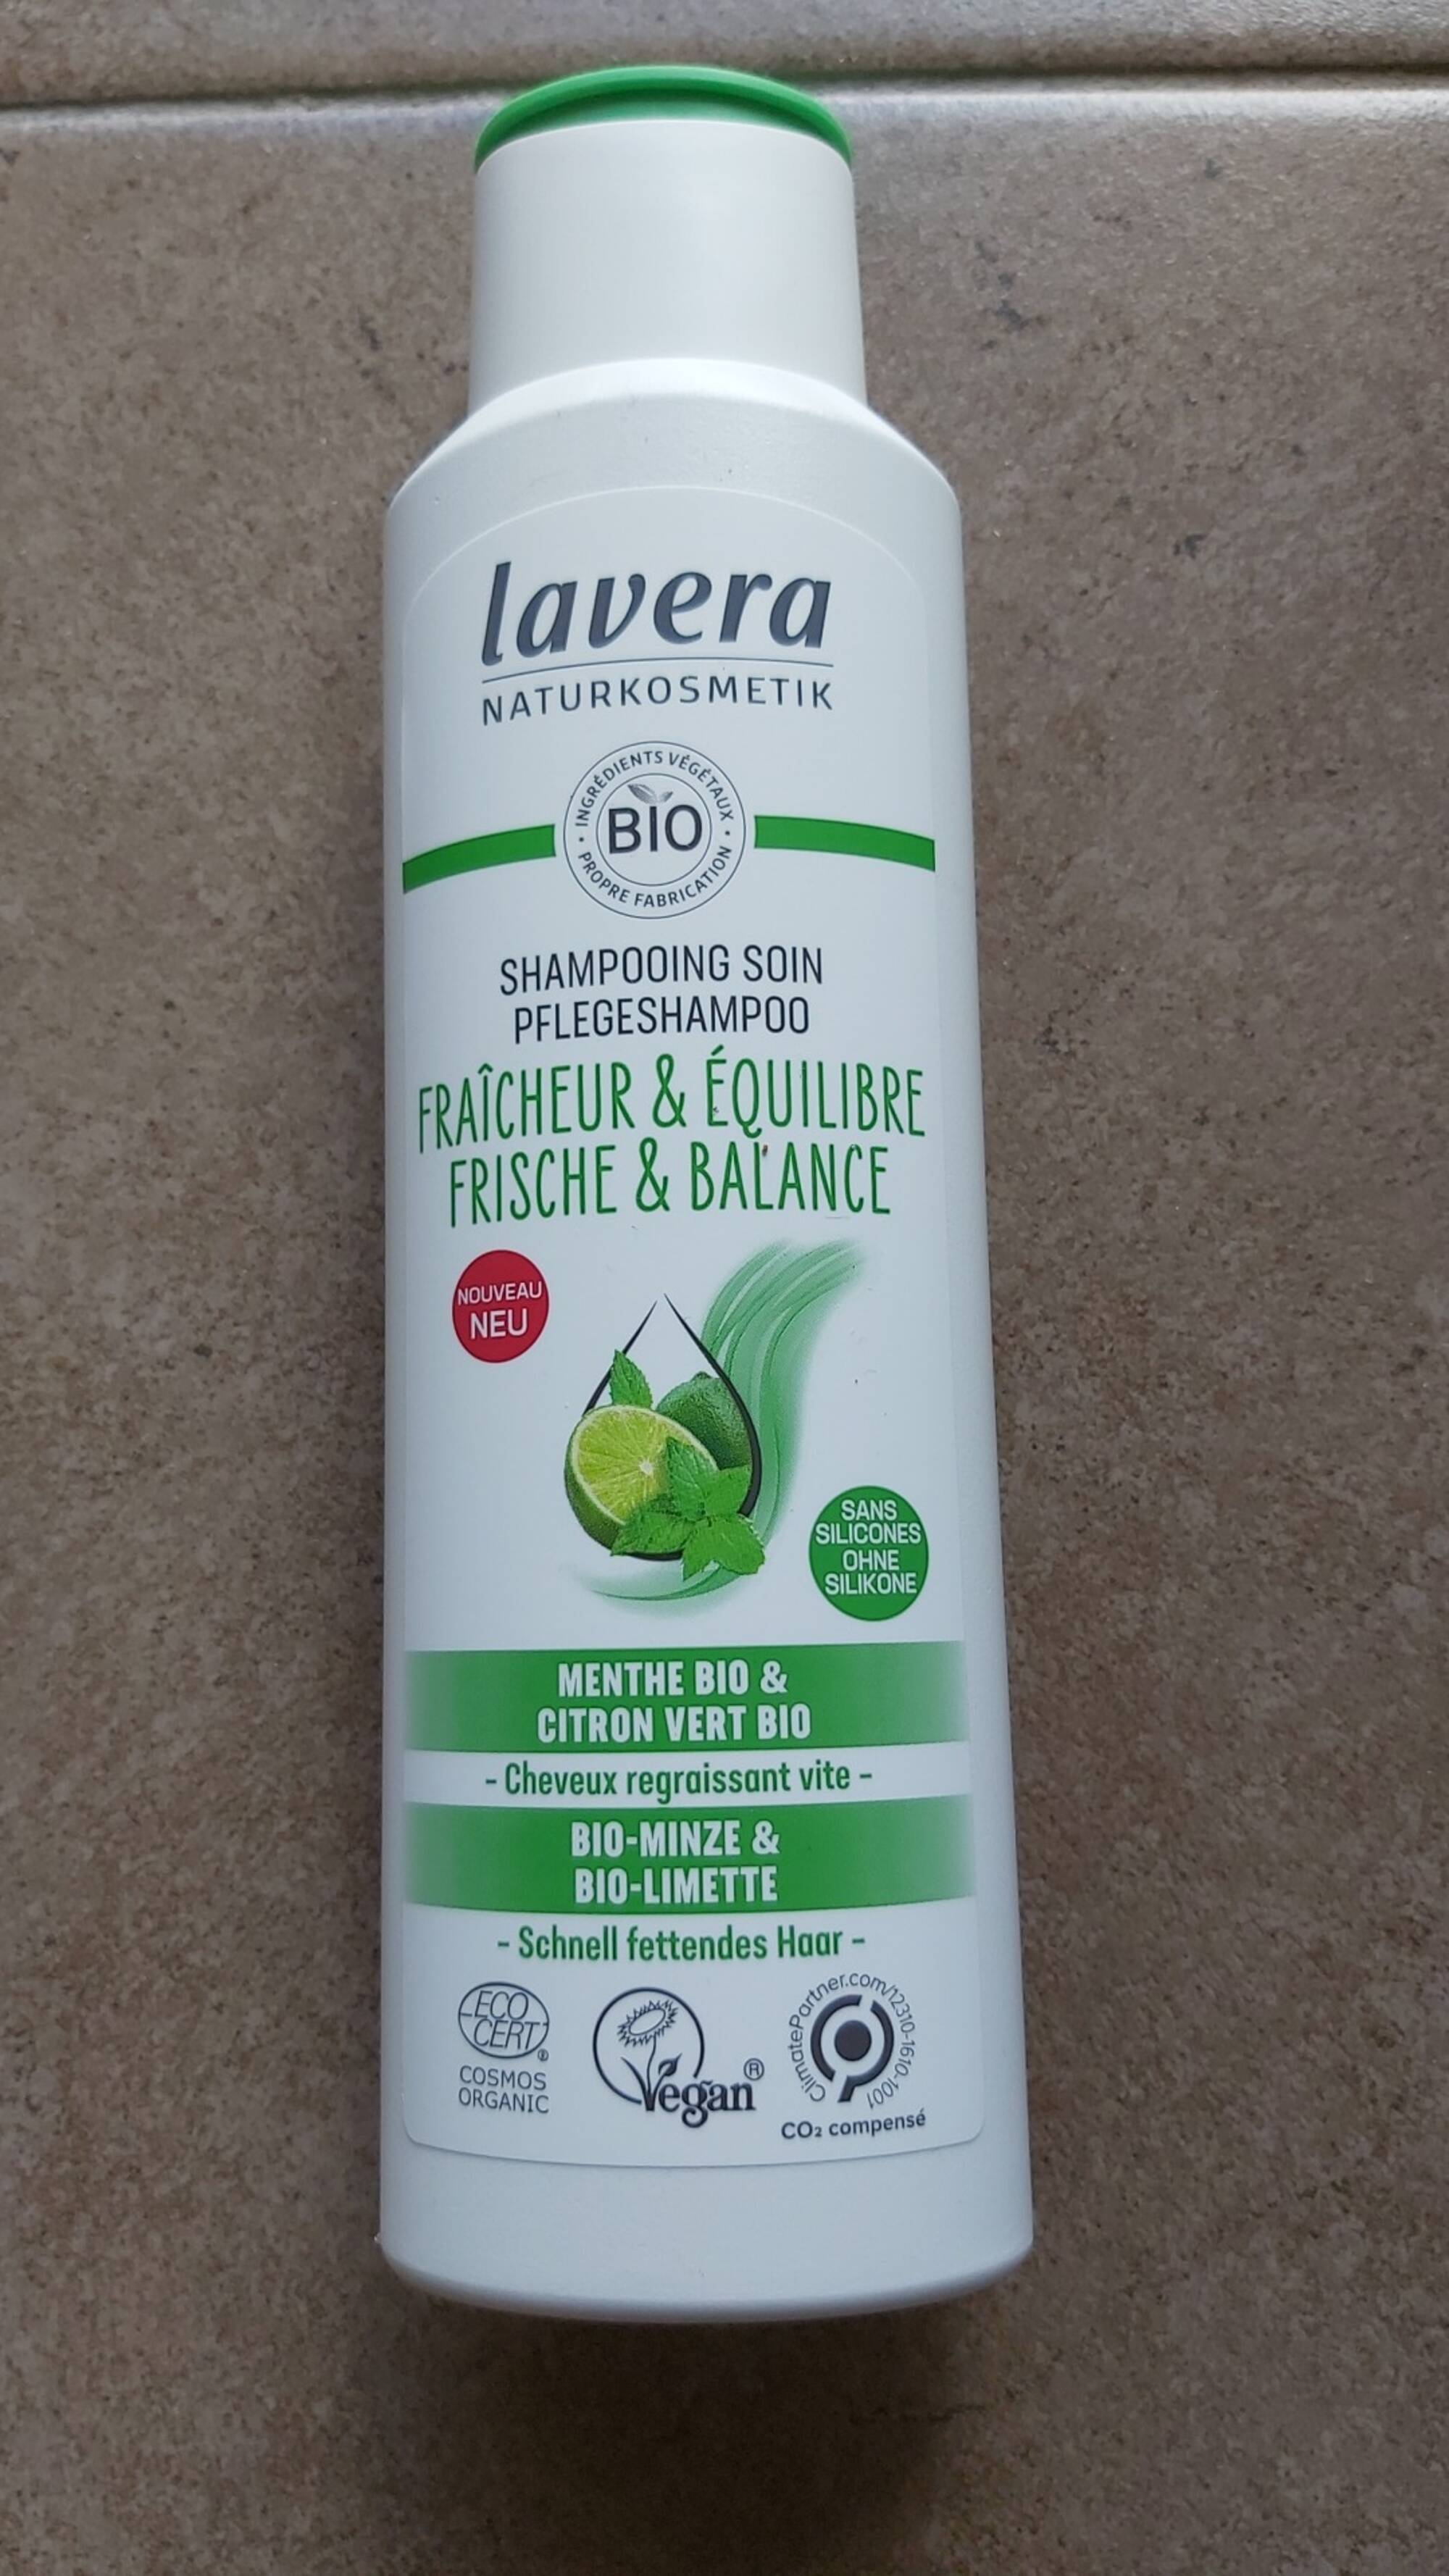 LAVERA NATURKOSMETIK - Shampooing soin fraîcheur & équilibre 